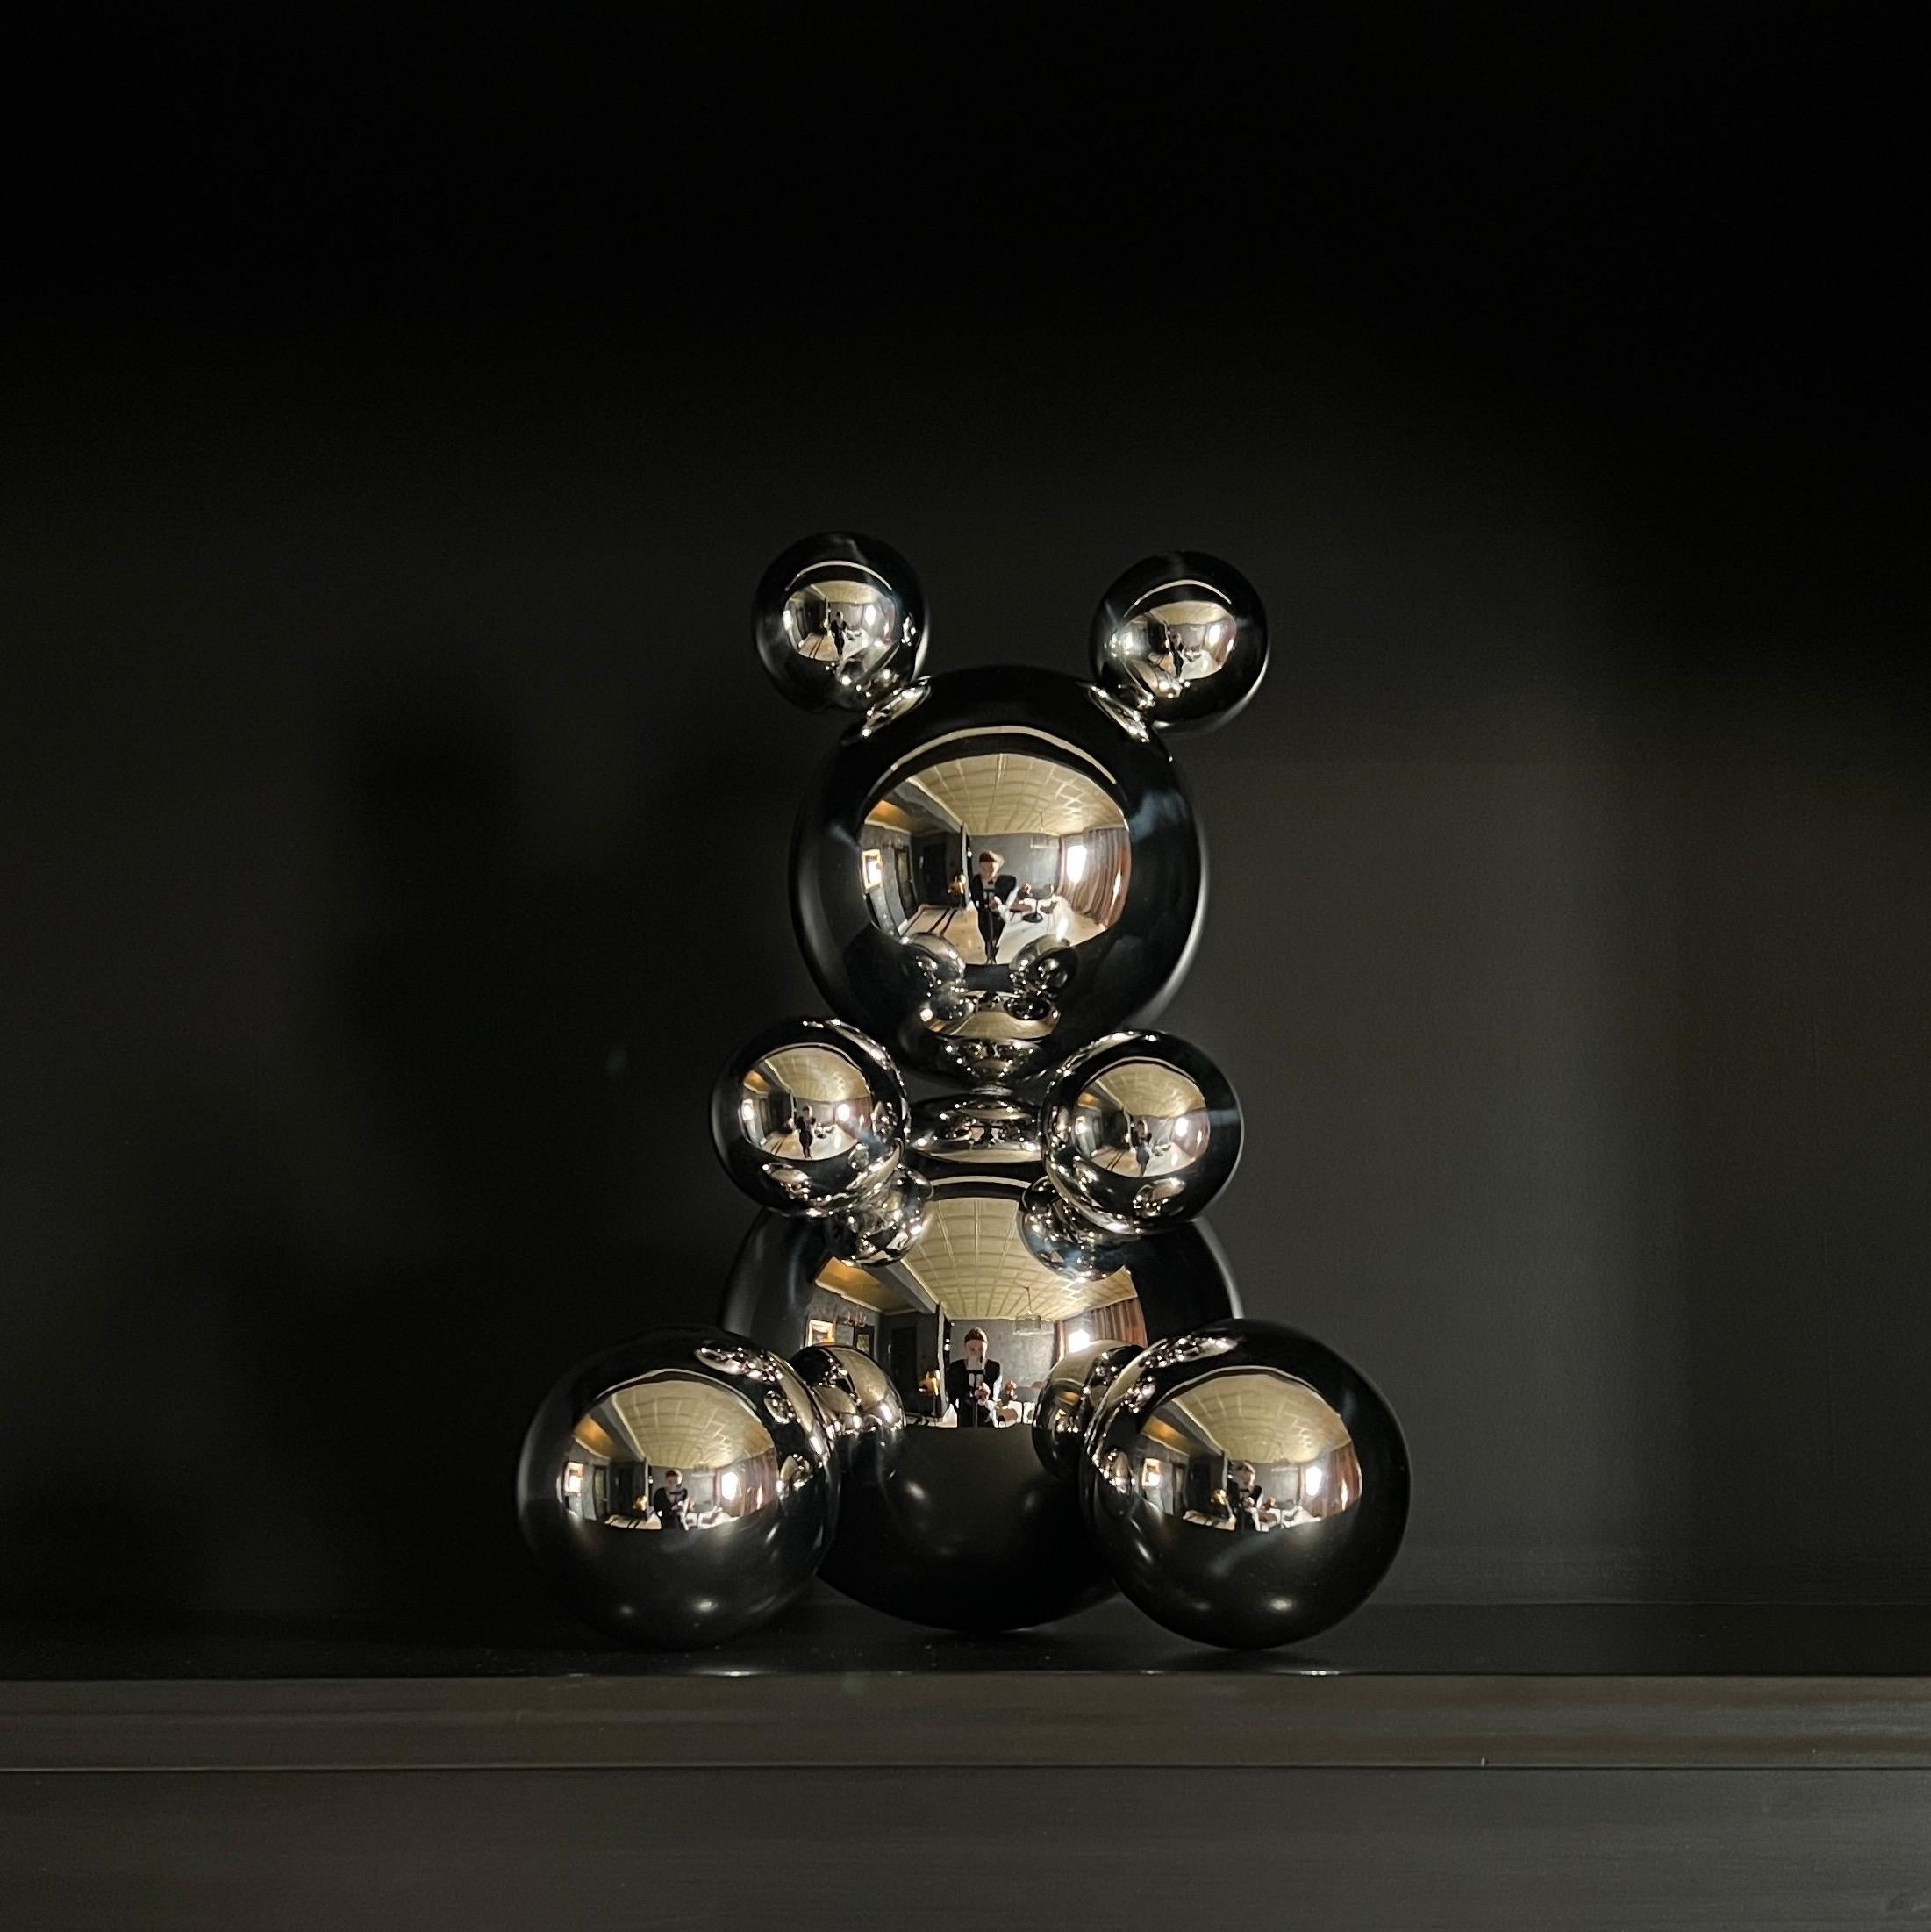 Middle Stainless Steel Bear 'Thomas' Sculpture Minimalistic Animal 3